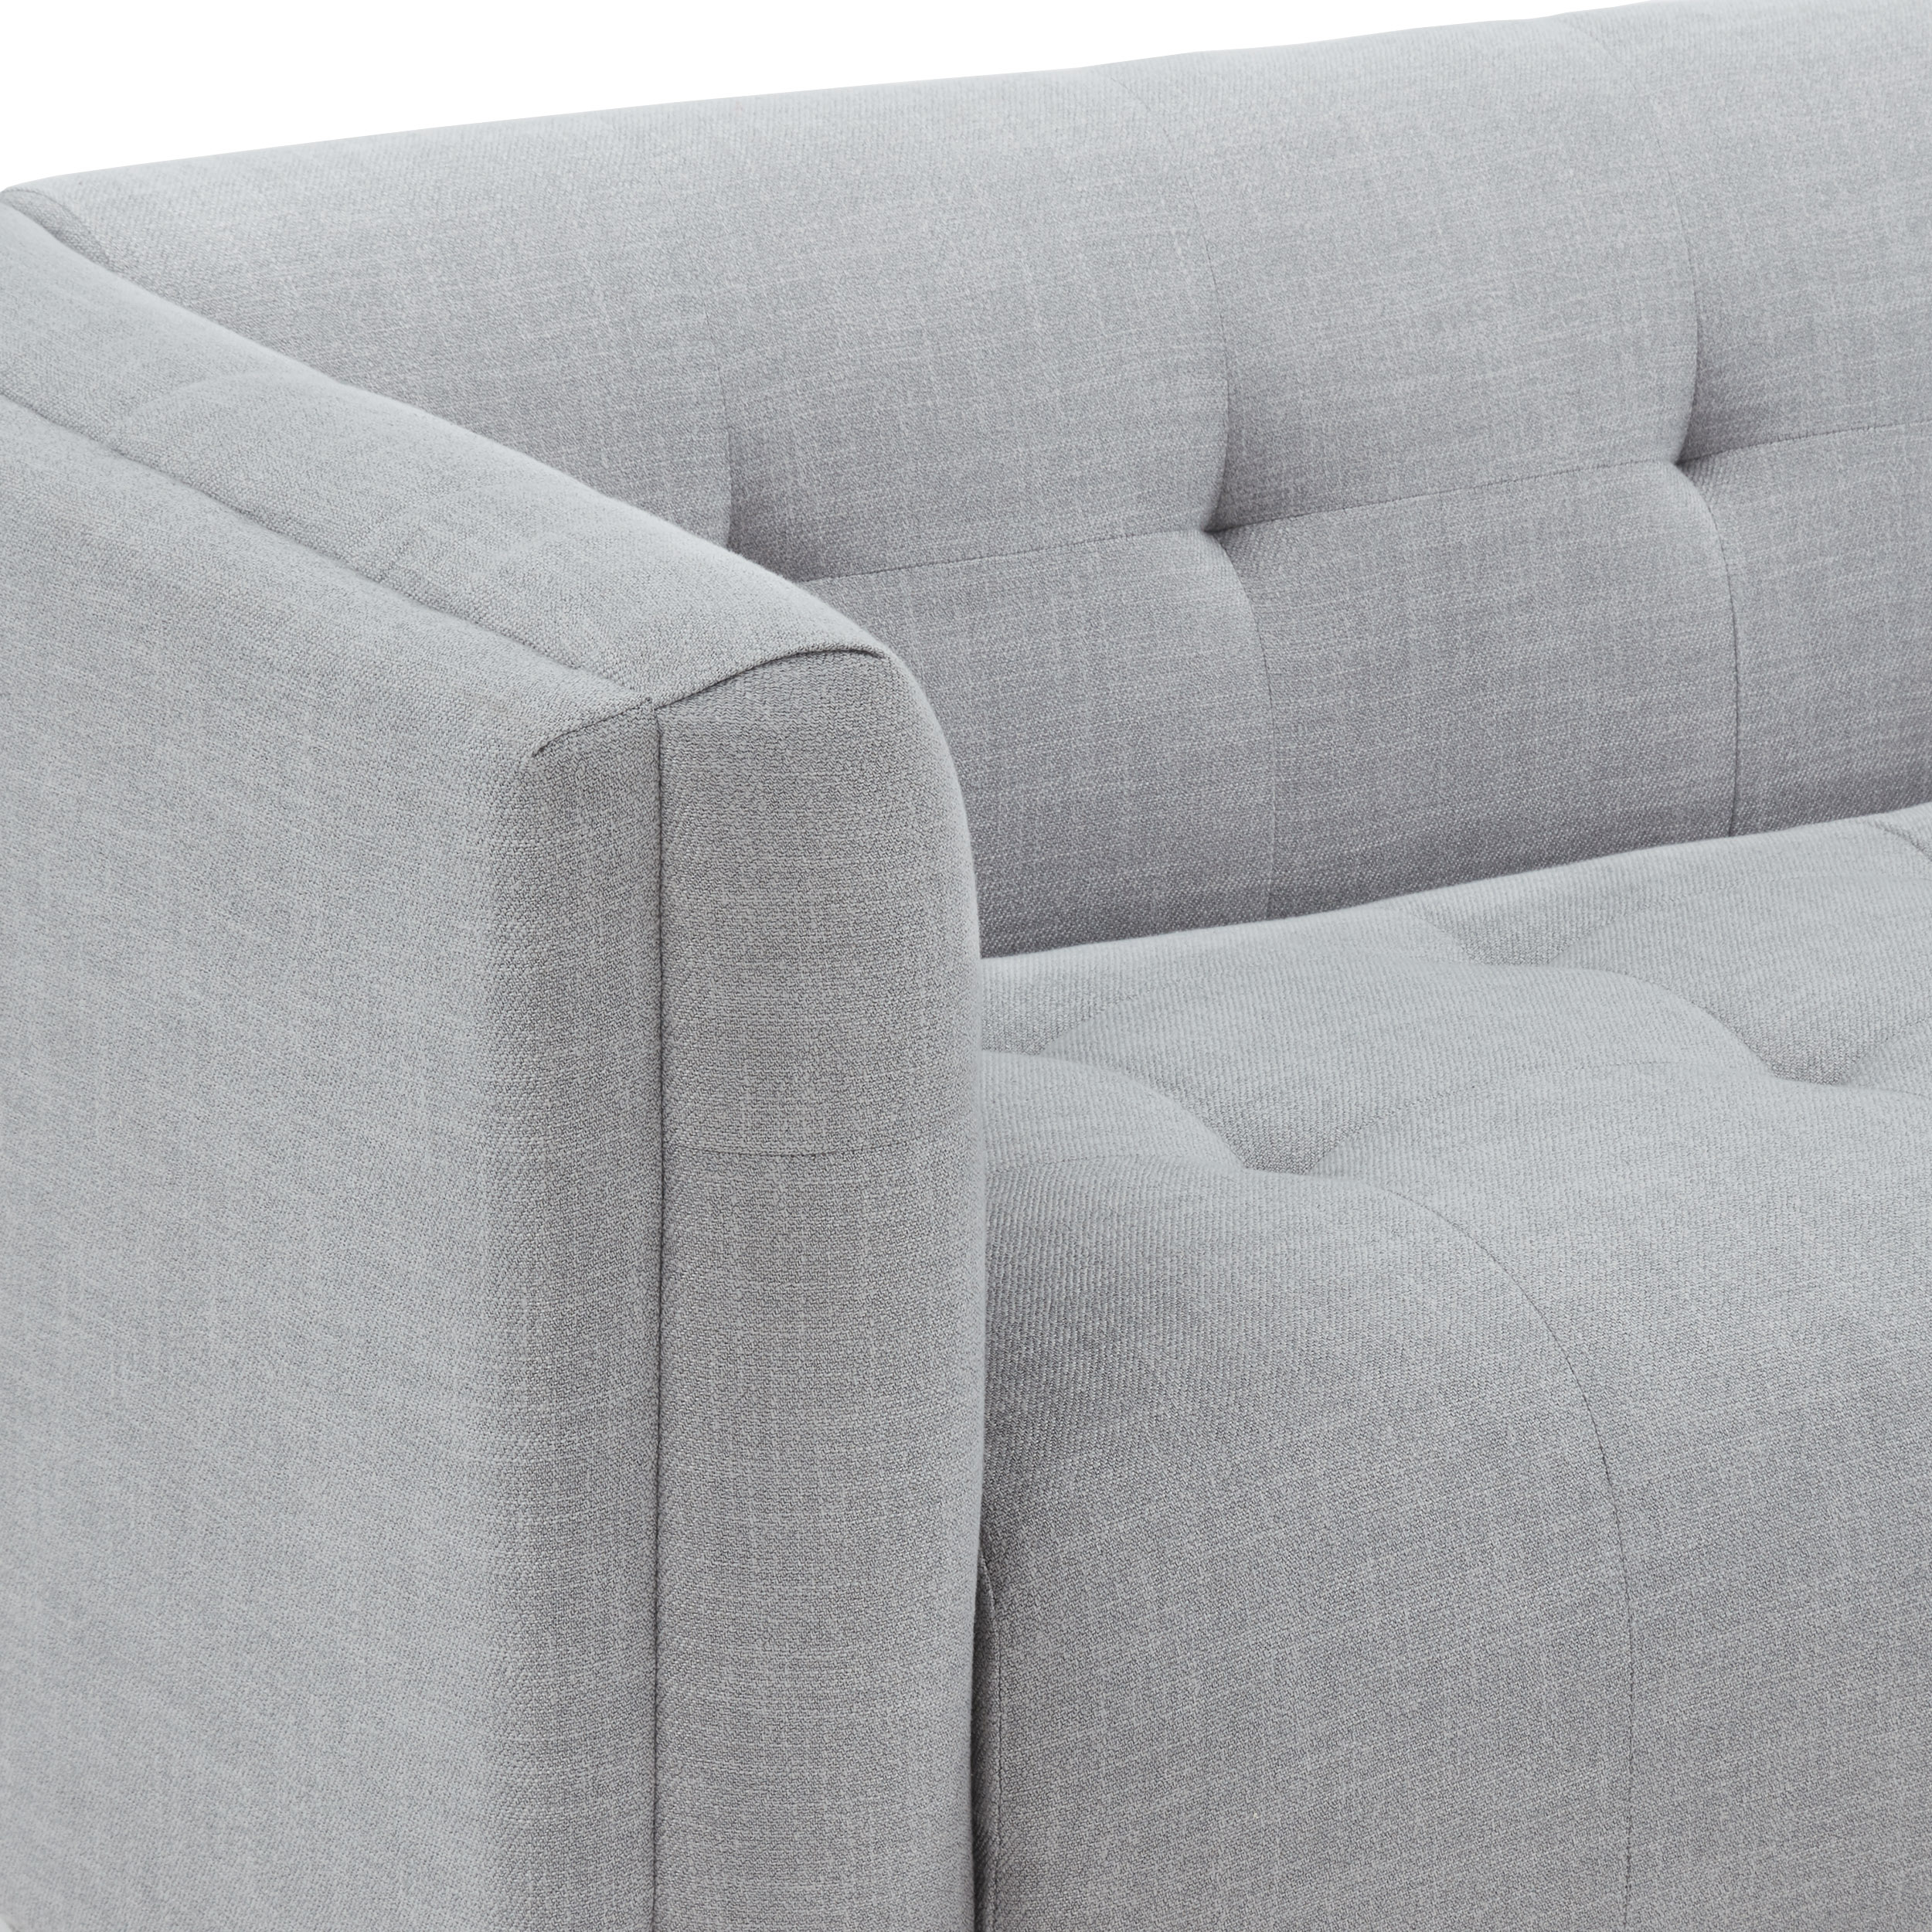 Lagom Fabric Upholstered Sofa, Light Gray, Dark Brown - image 3 of 9